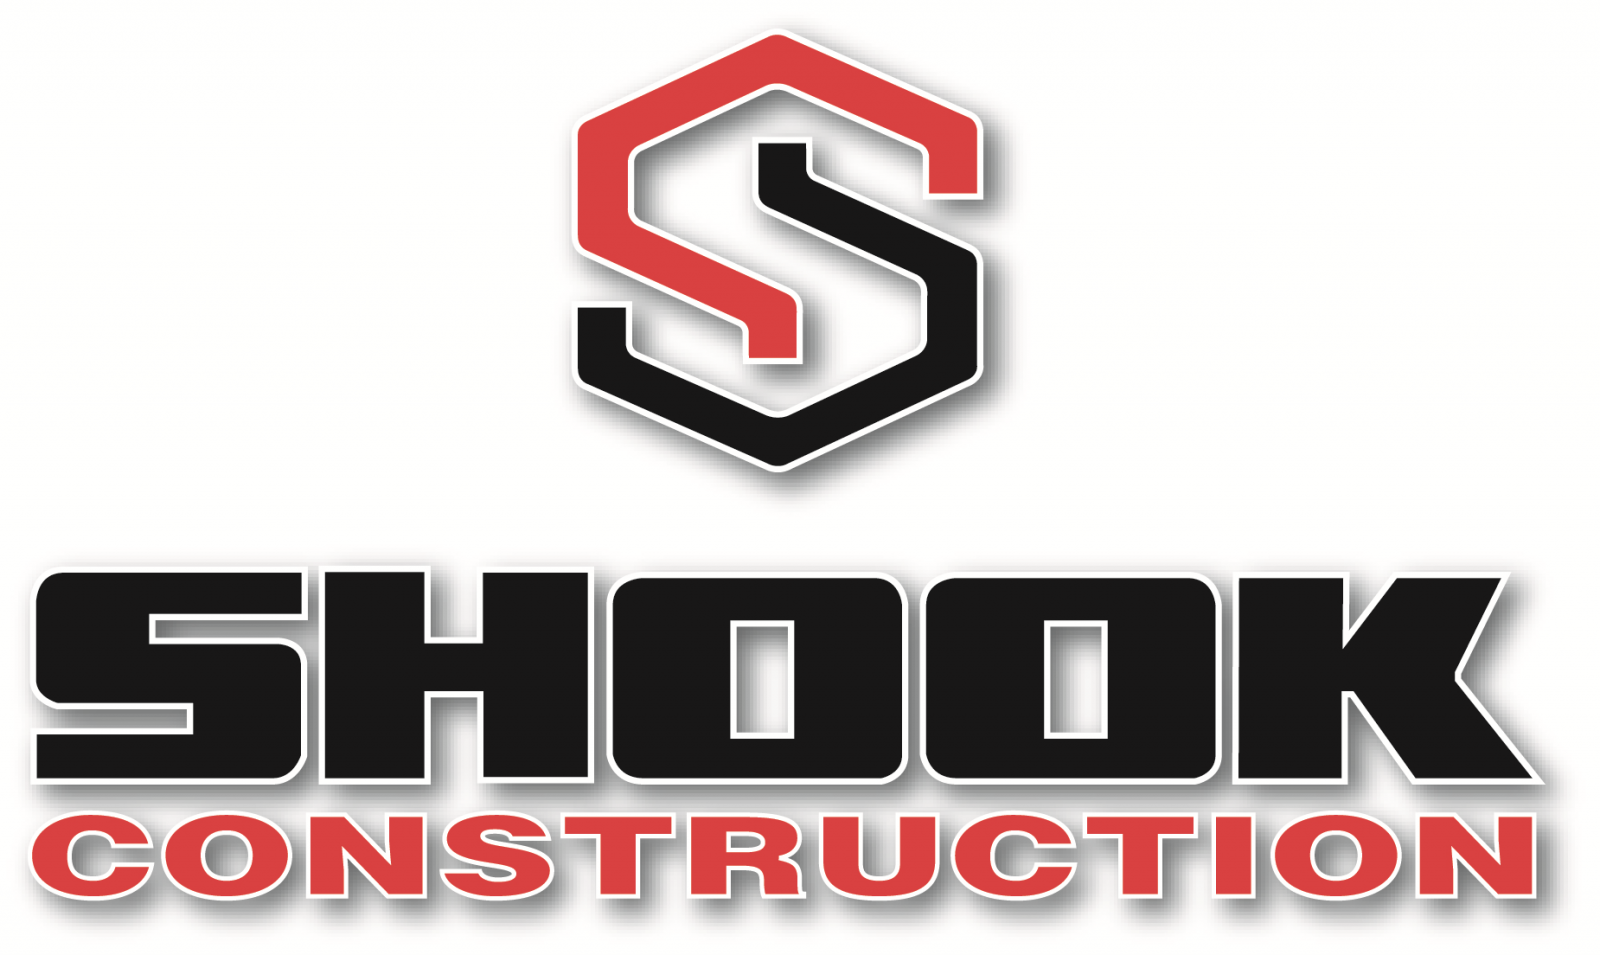 Shook Construction